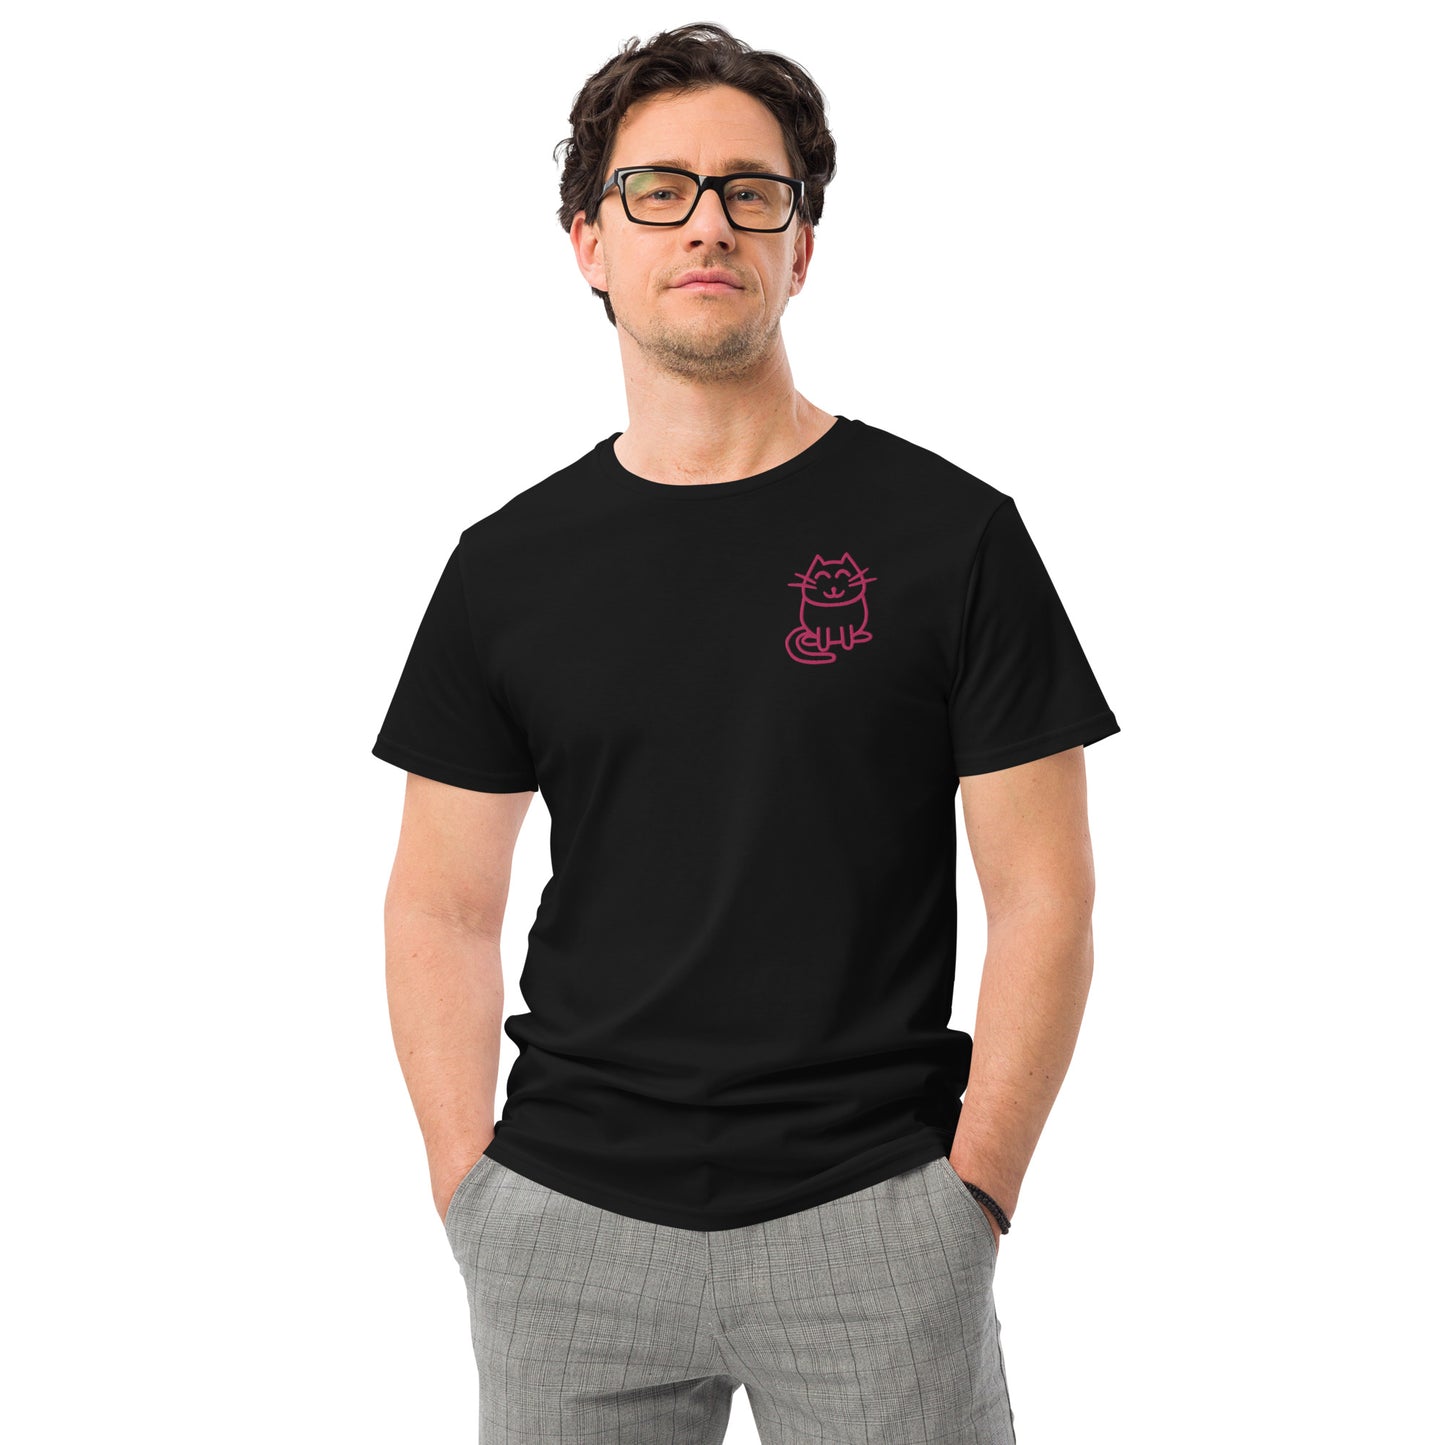 Men's premium cotton t-shirt(Embroidered)